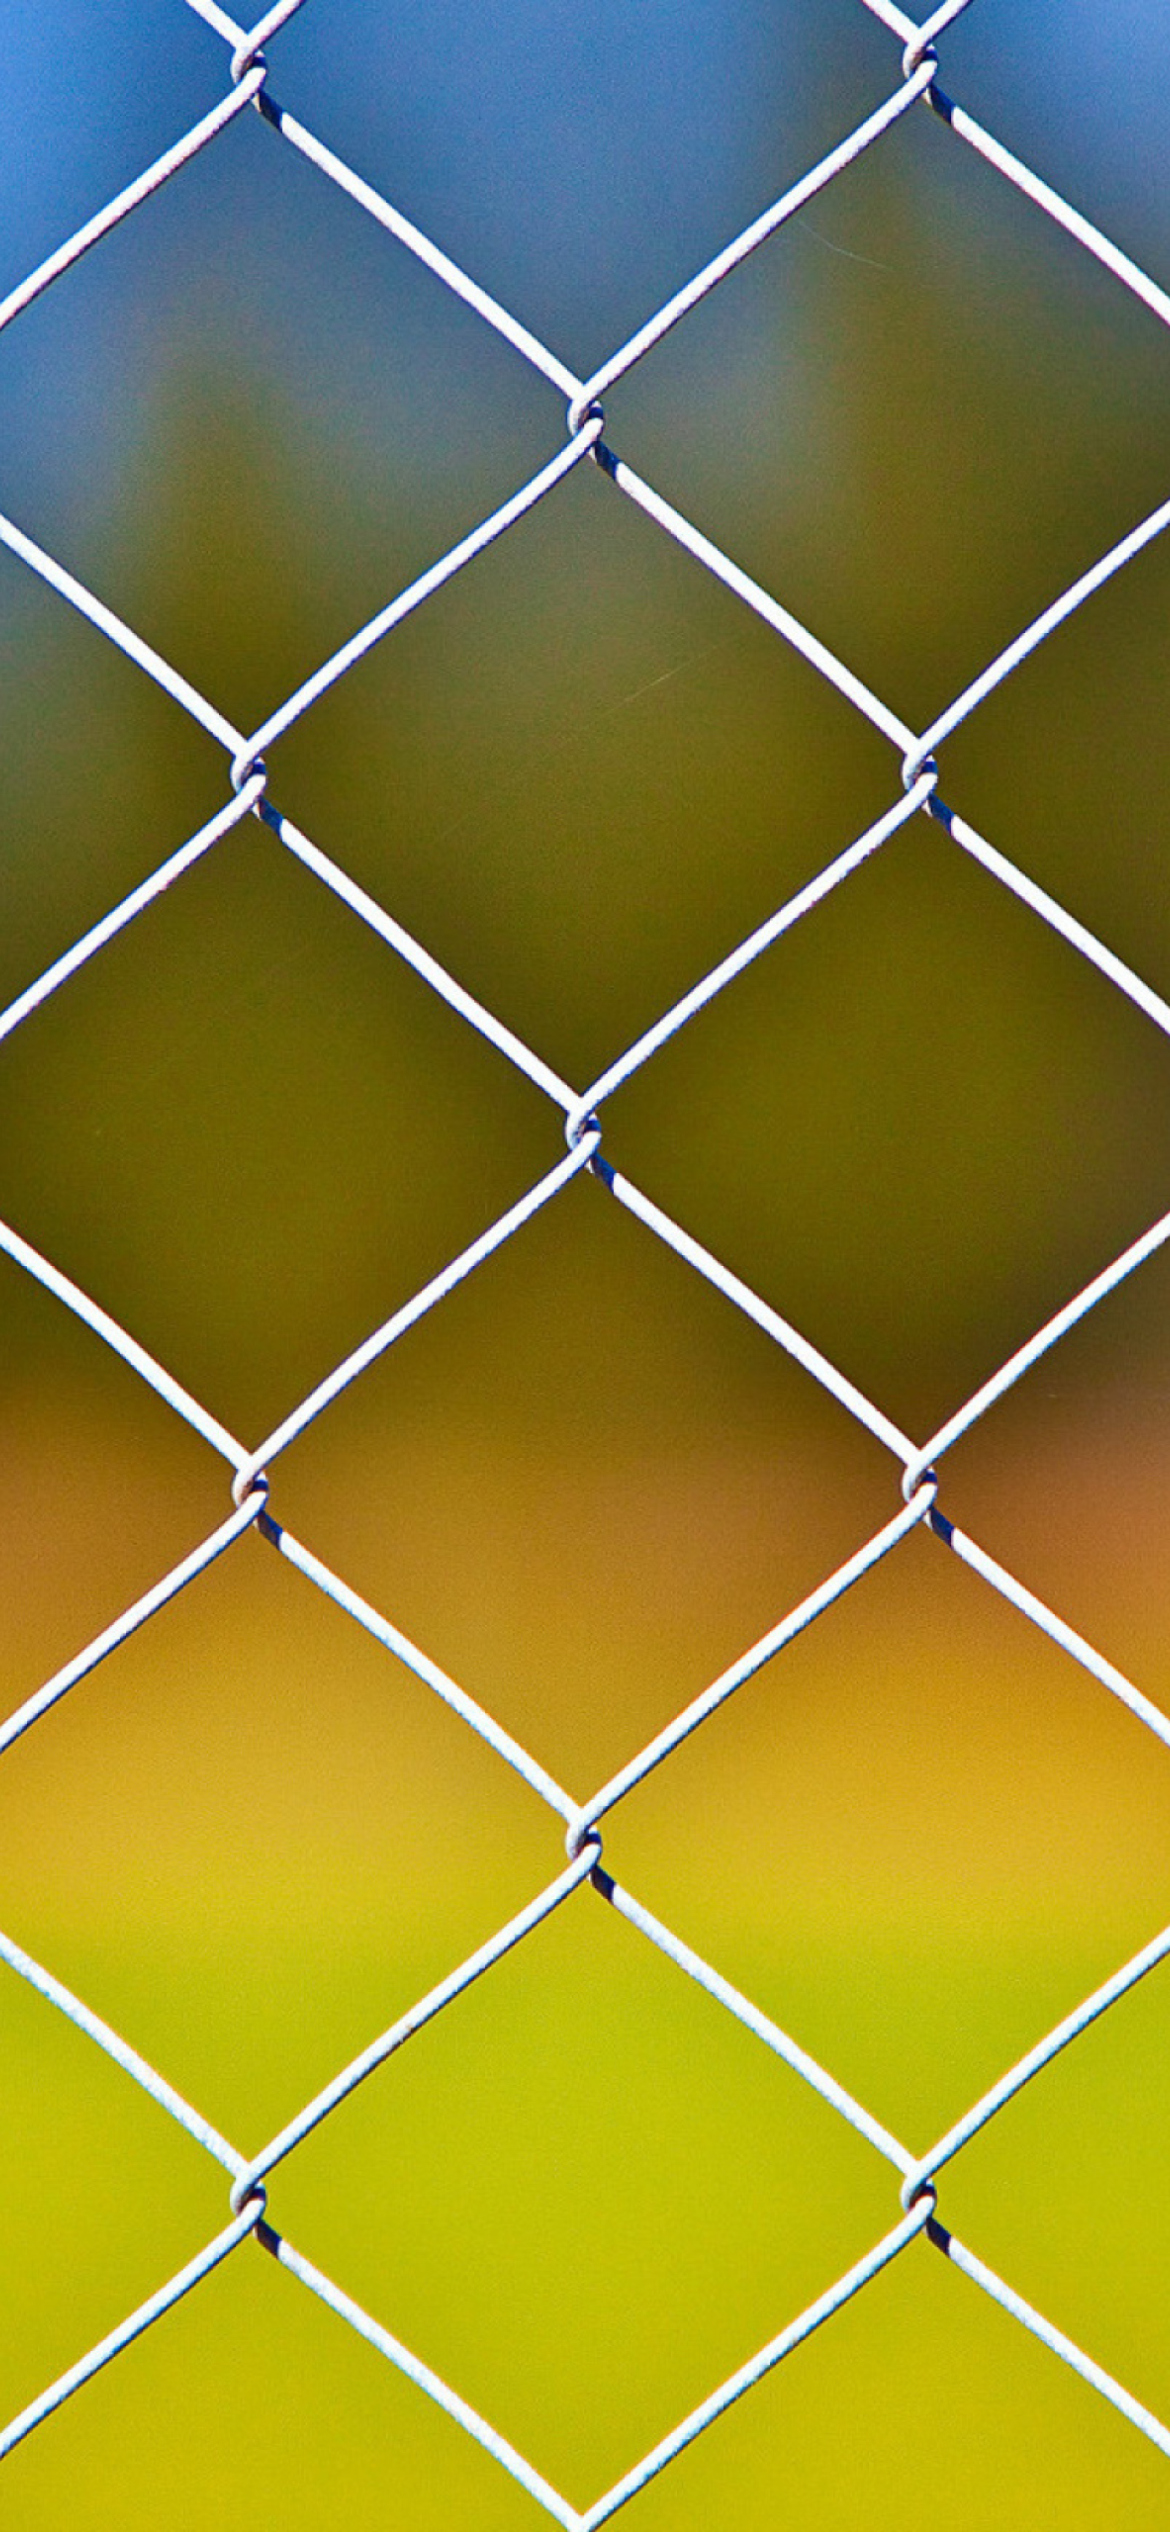 Das Cage Fence Wallpaper 1170x2532